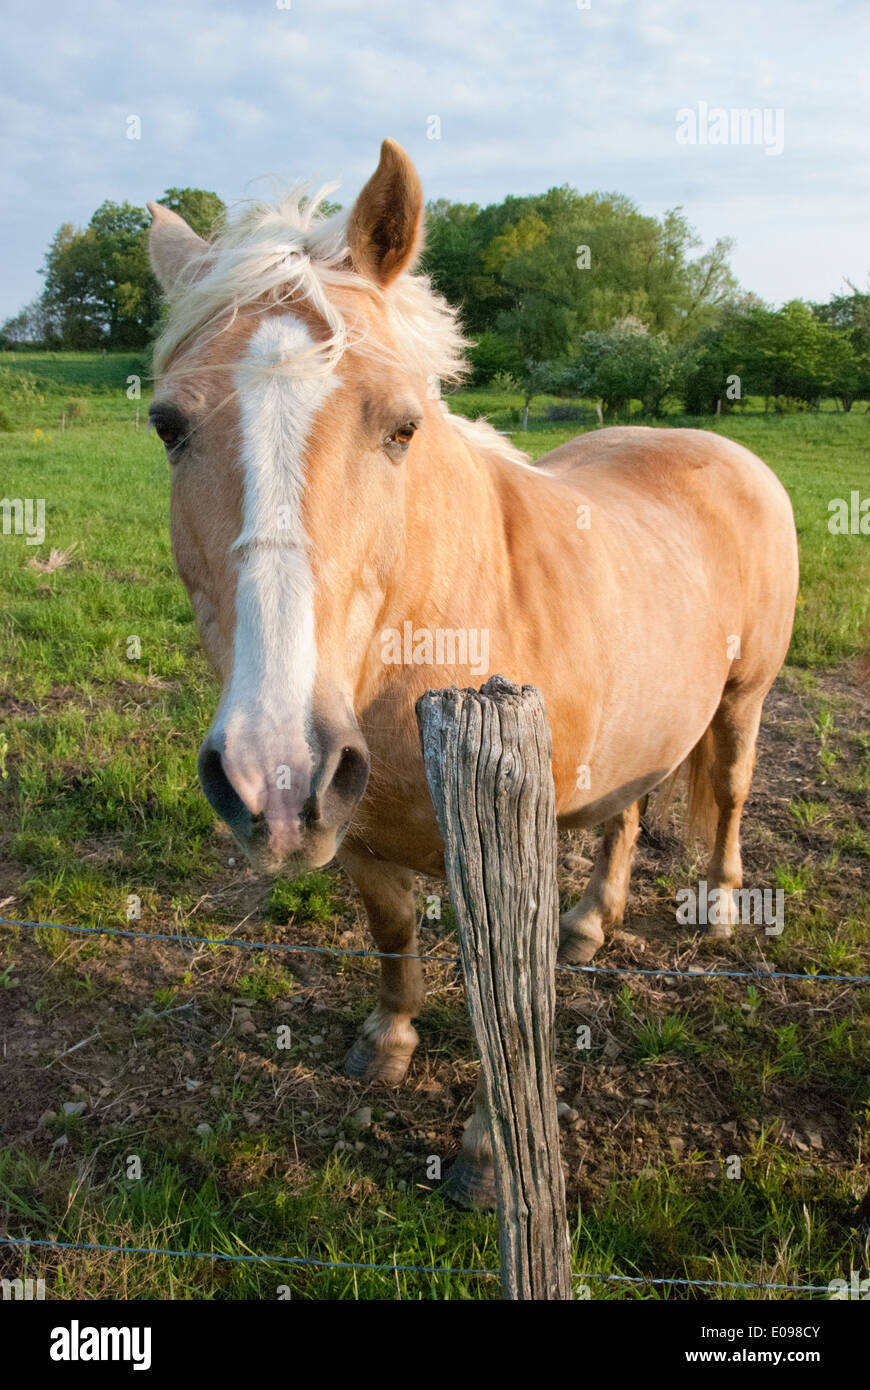 Tan Horse in Pasture Stock Photo